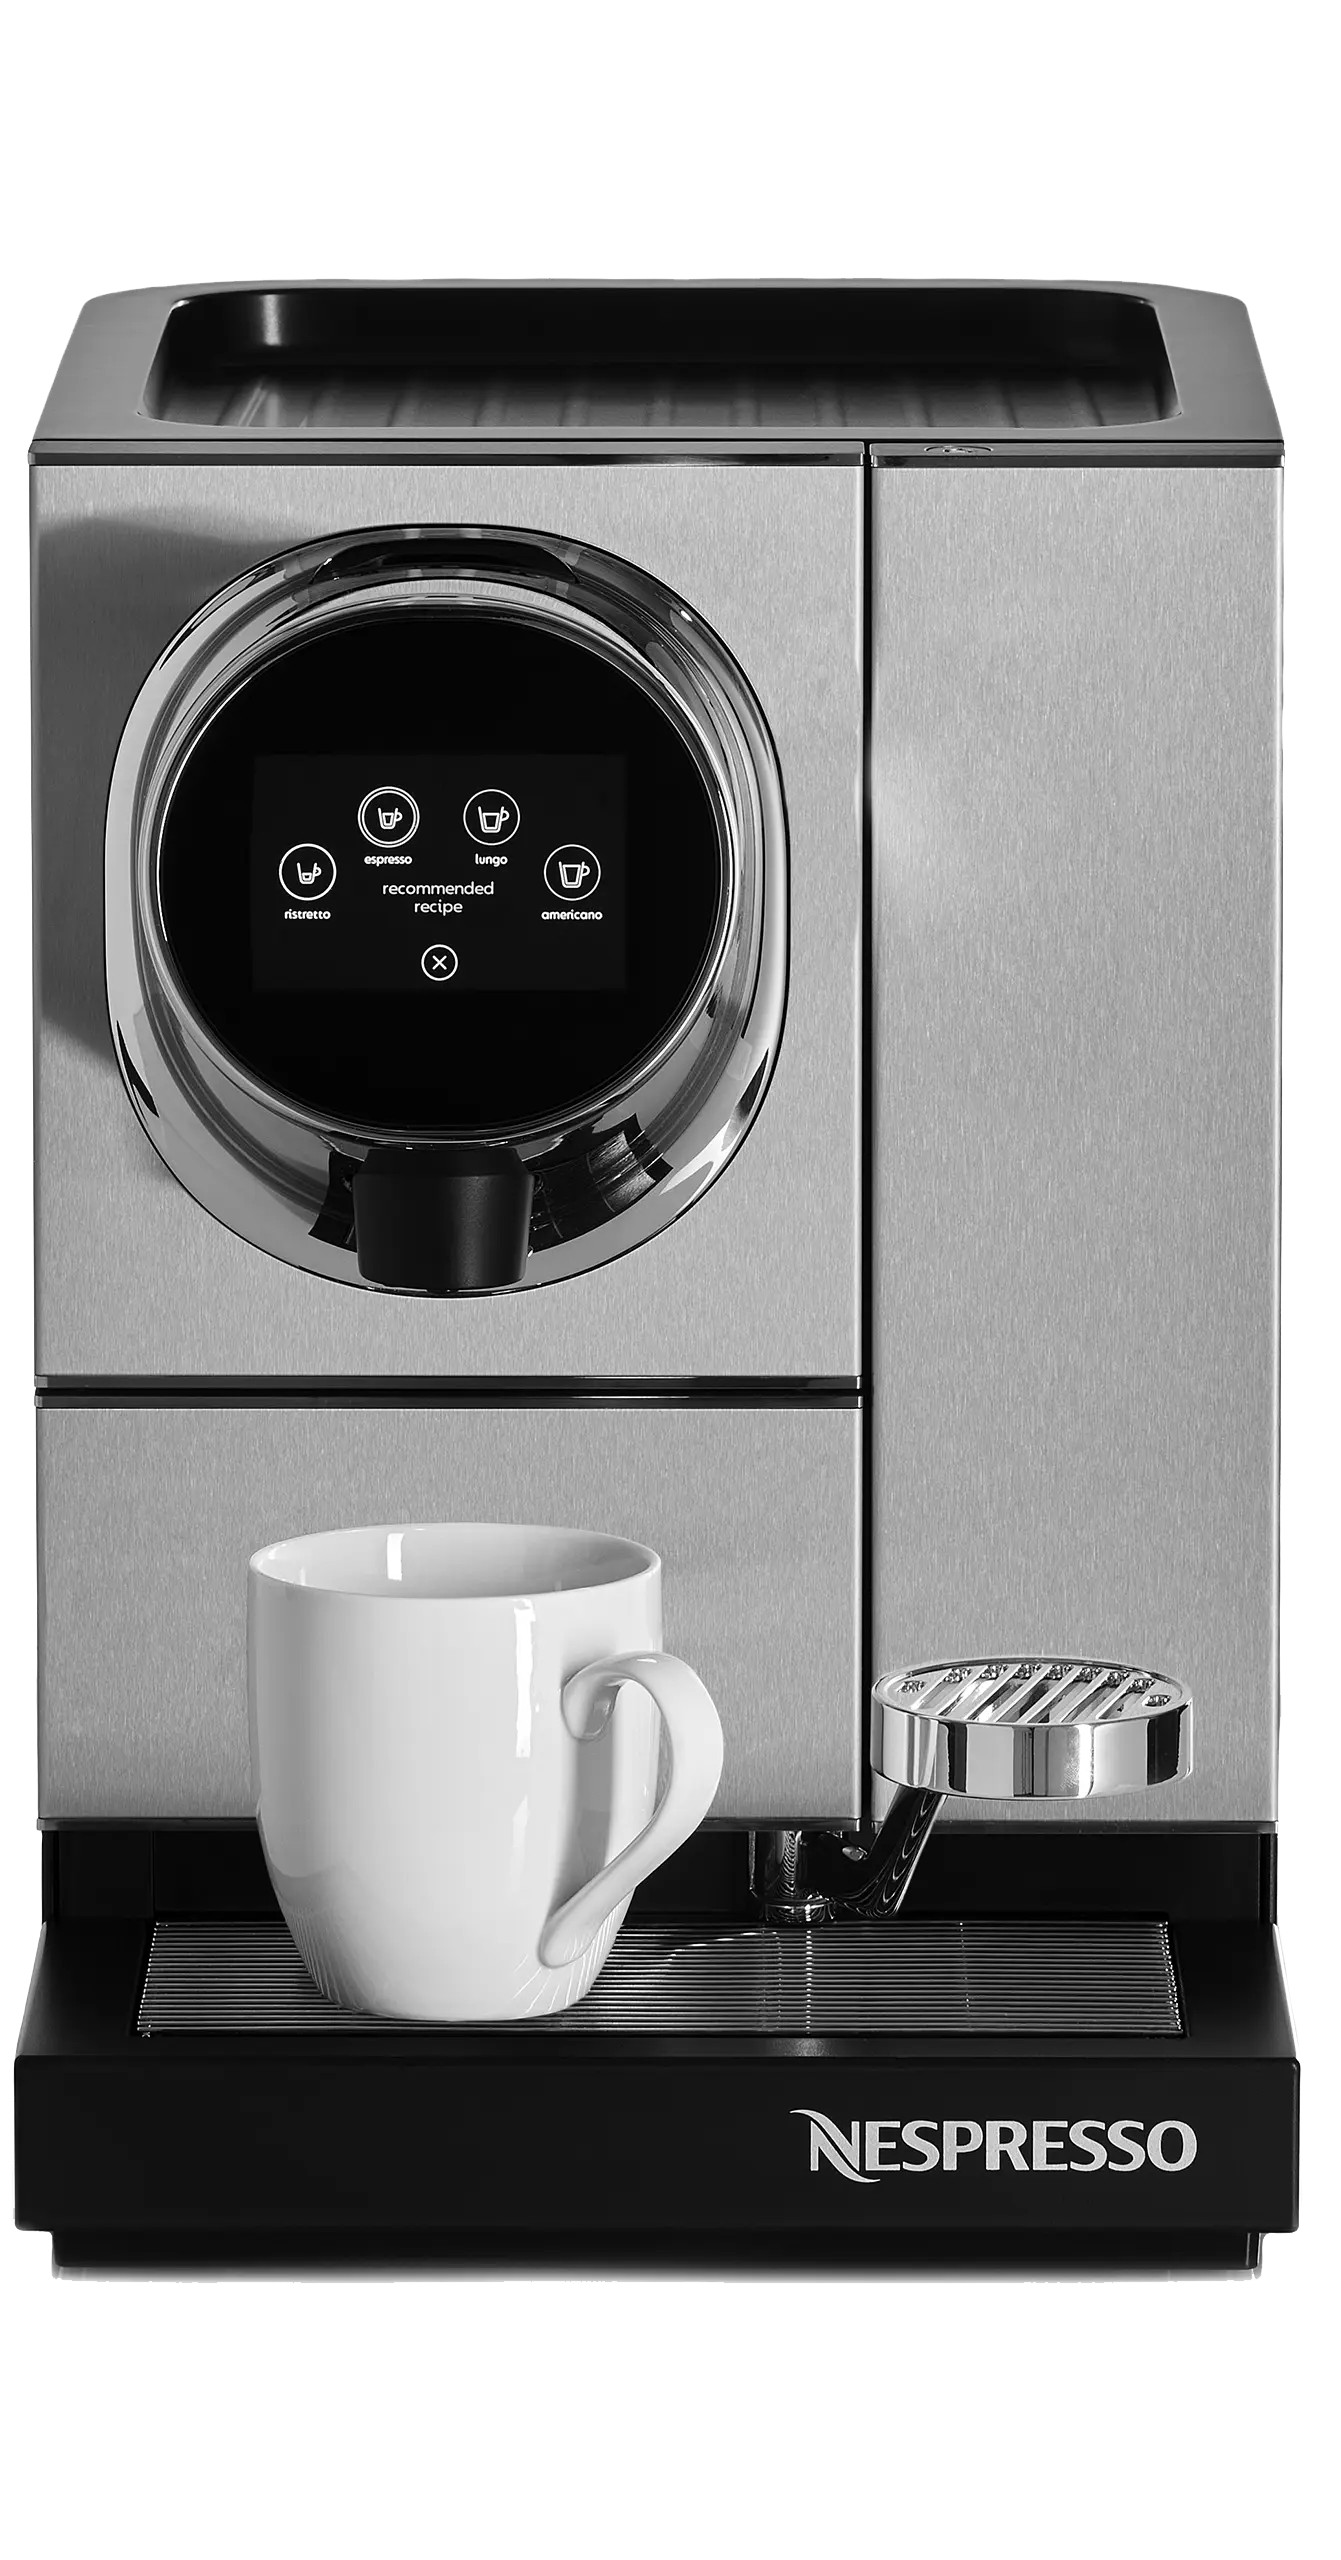 Vertuo Lattissima Coffee Machine, White